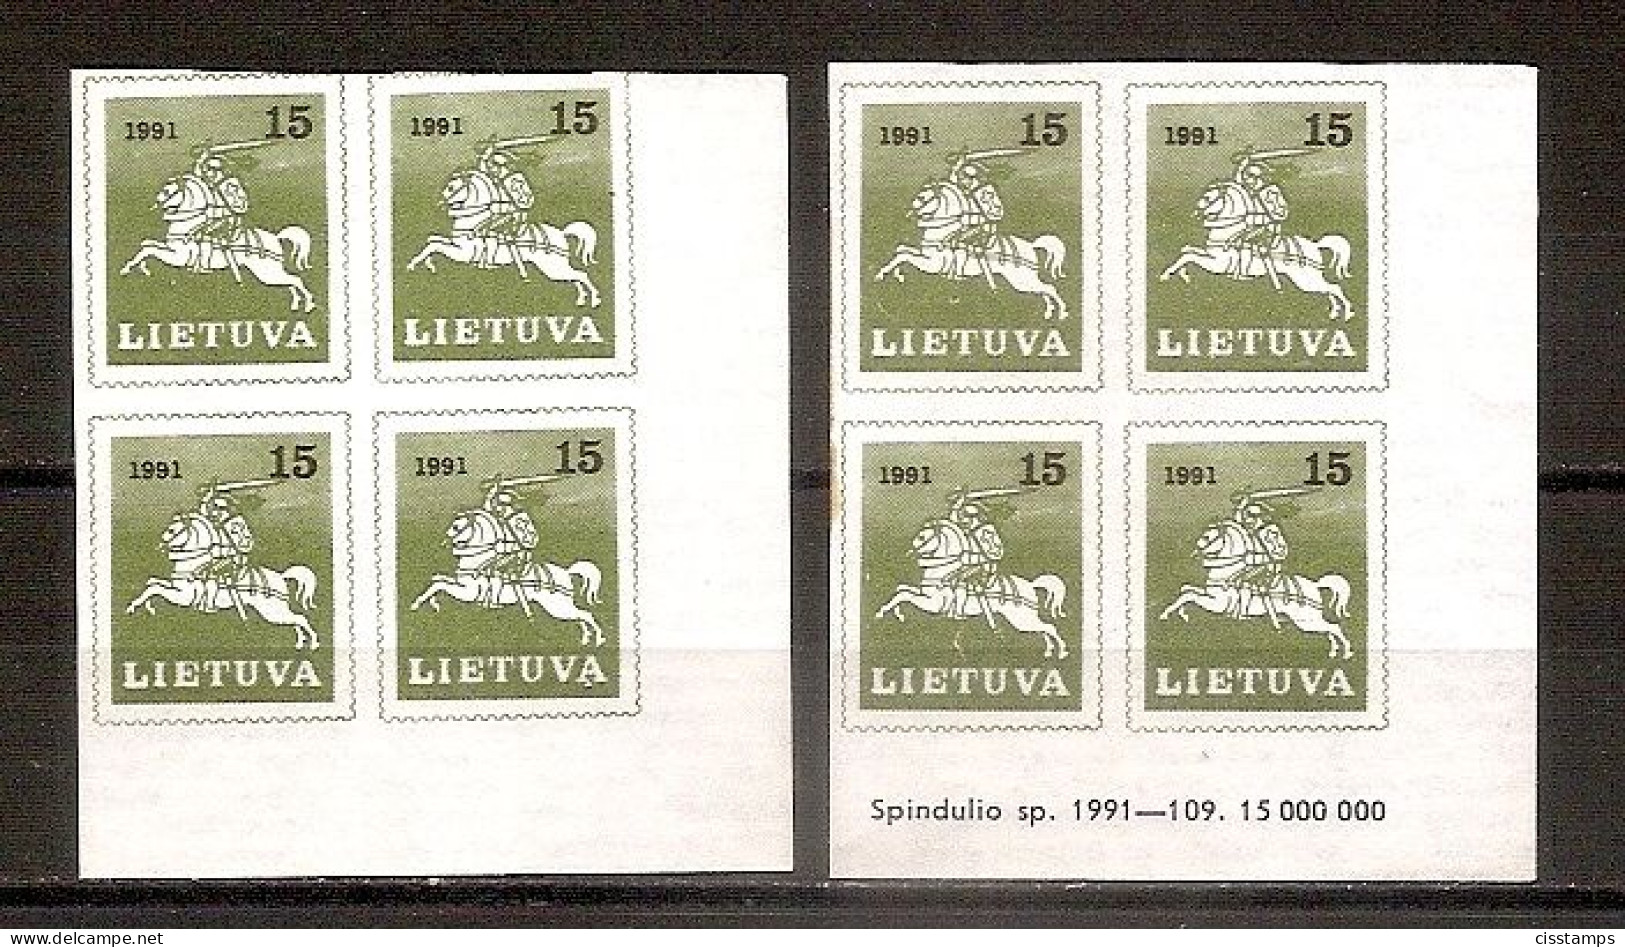 LITHUANIA 1991●Definitive●Coat Of Arms●see Description●Mi 472●MNH - Lithuania